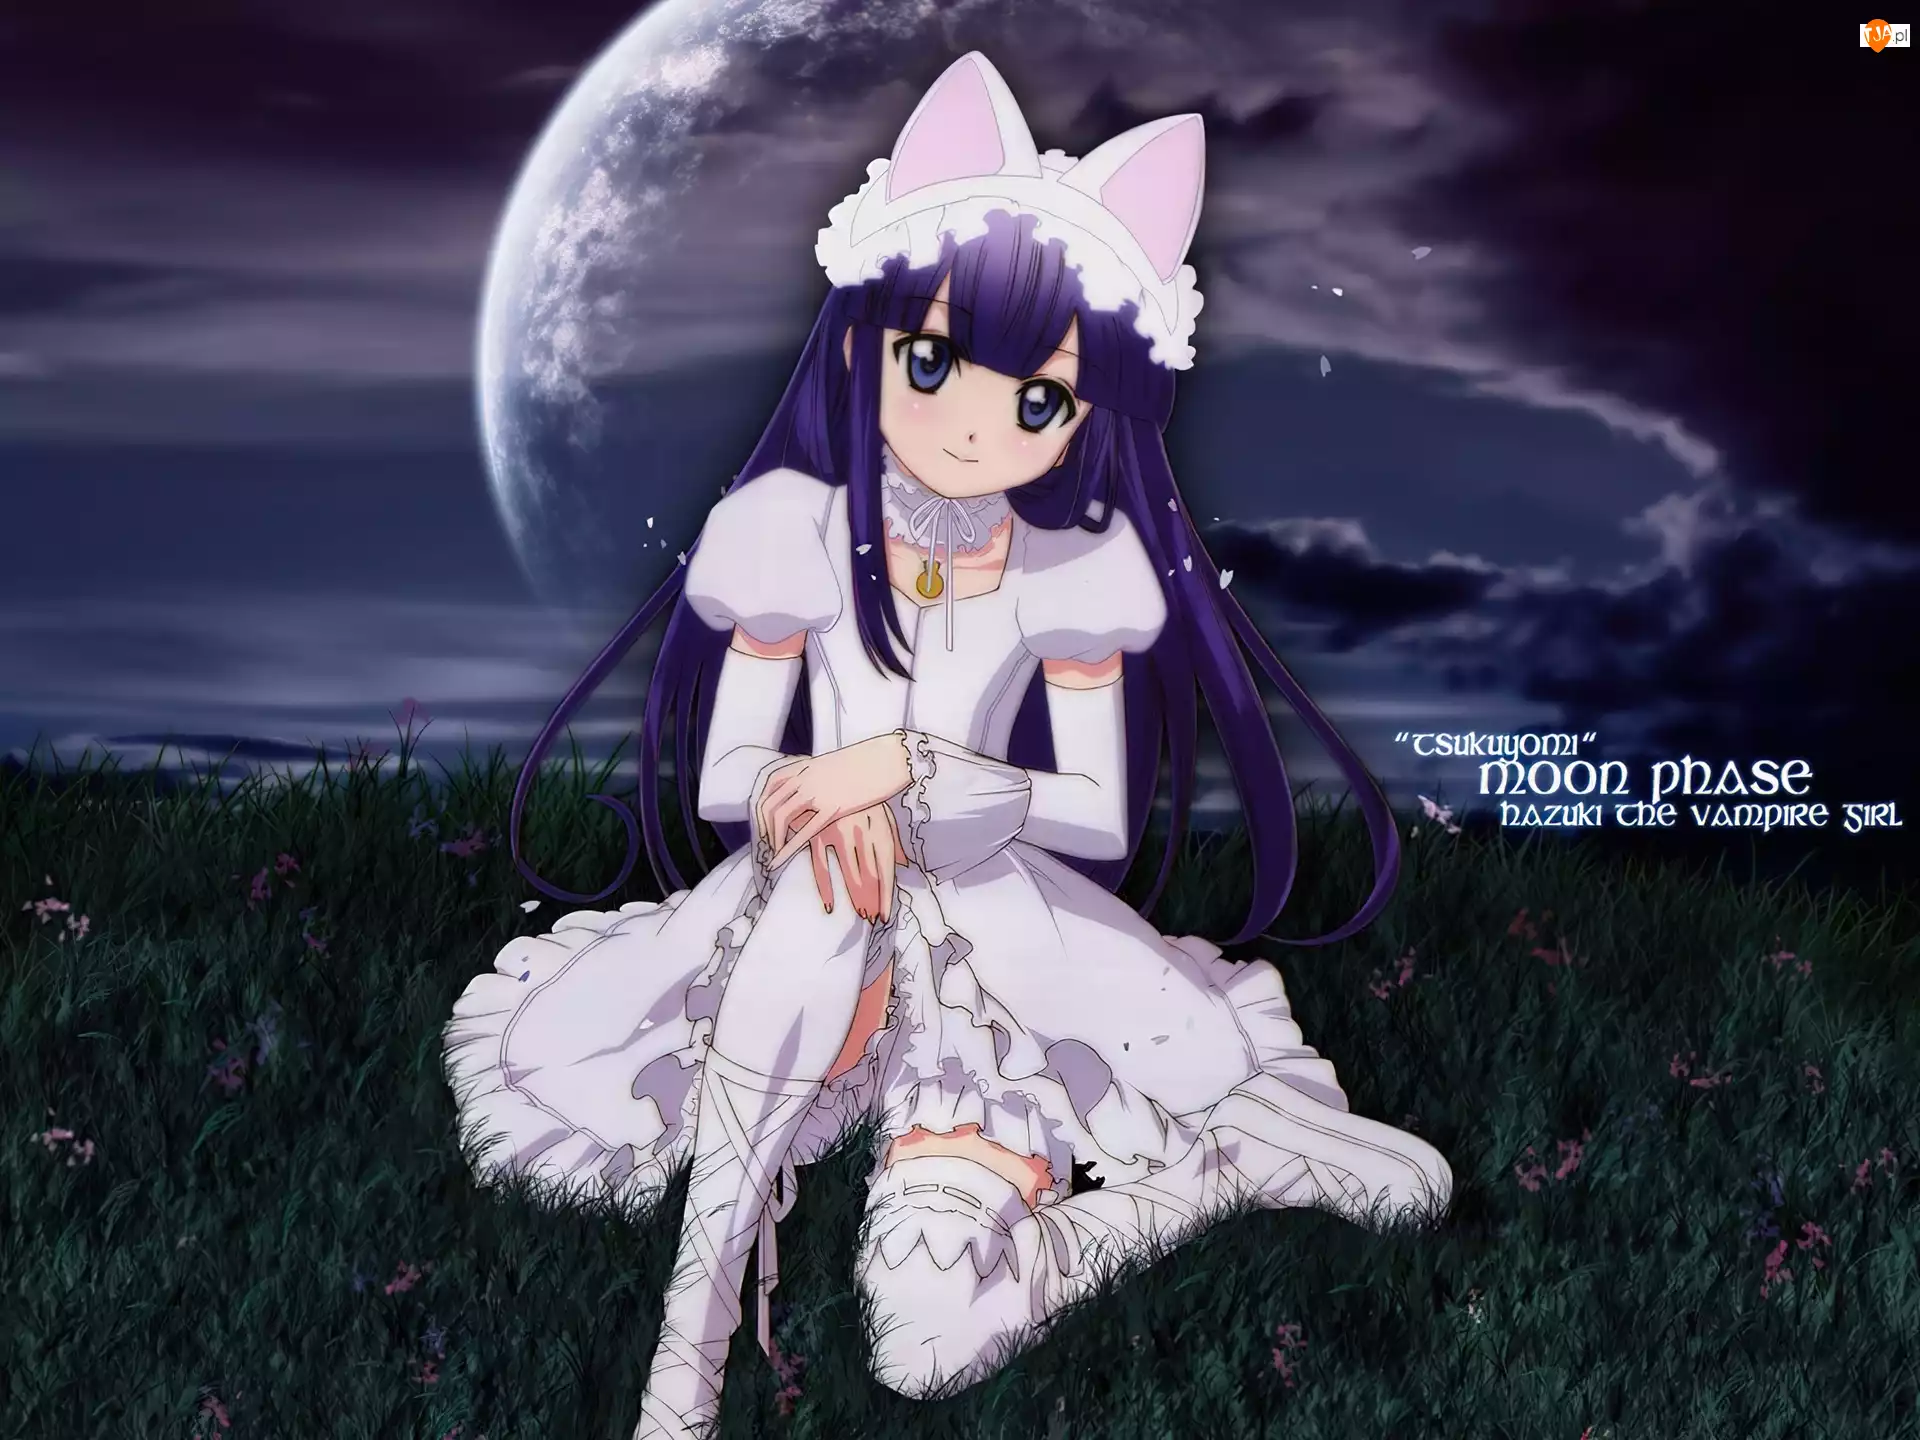 Tsukuyomi Moon Phase, niebo, trawa, dziewczynka